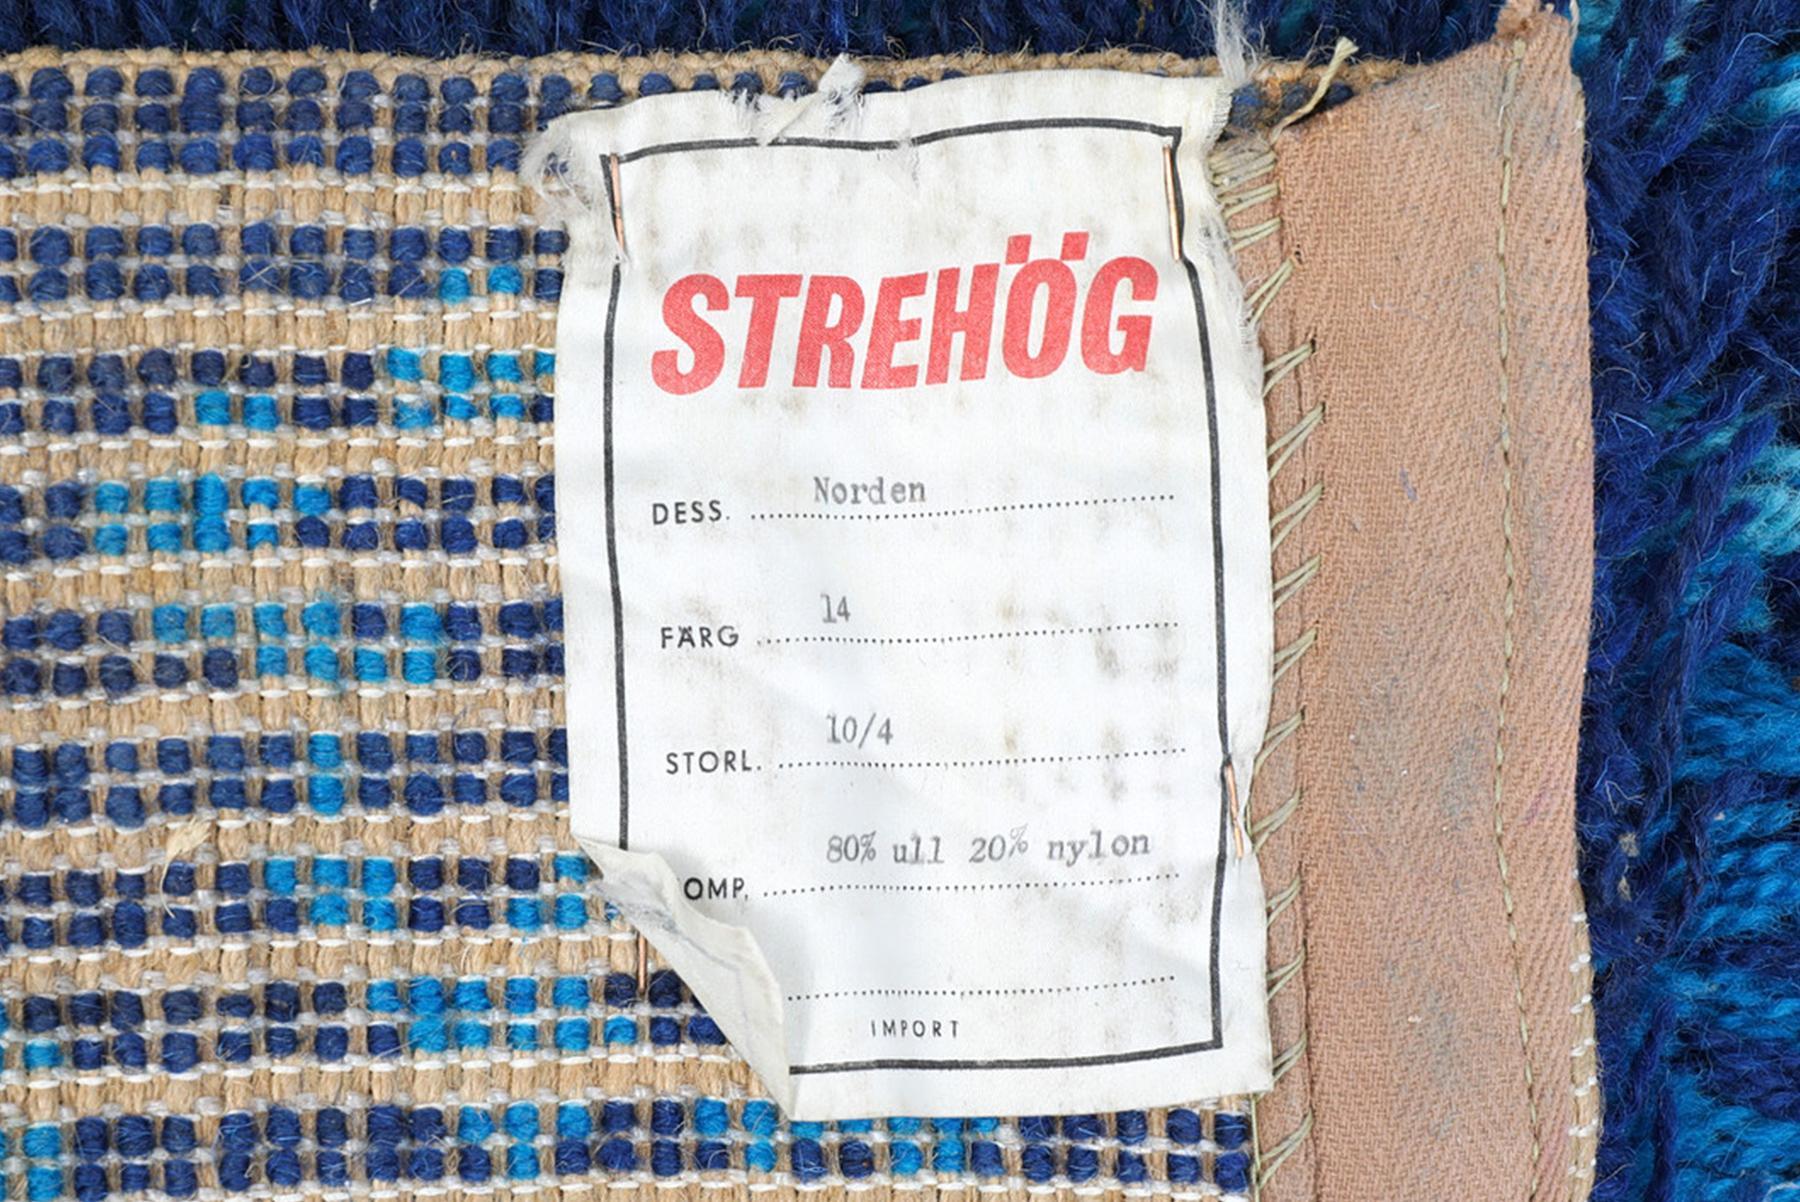 Swedish Large Blue High Pile Rya Rug by Strehog Norden For Sale